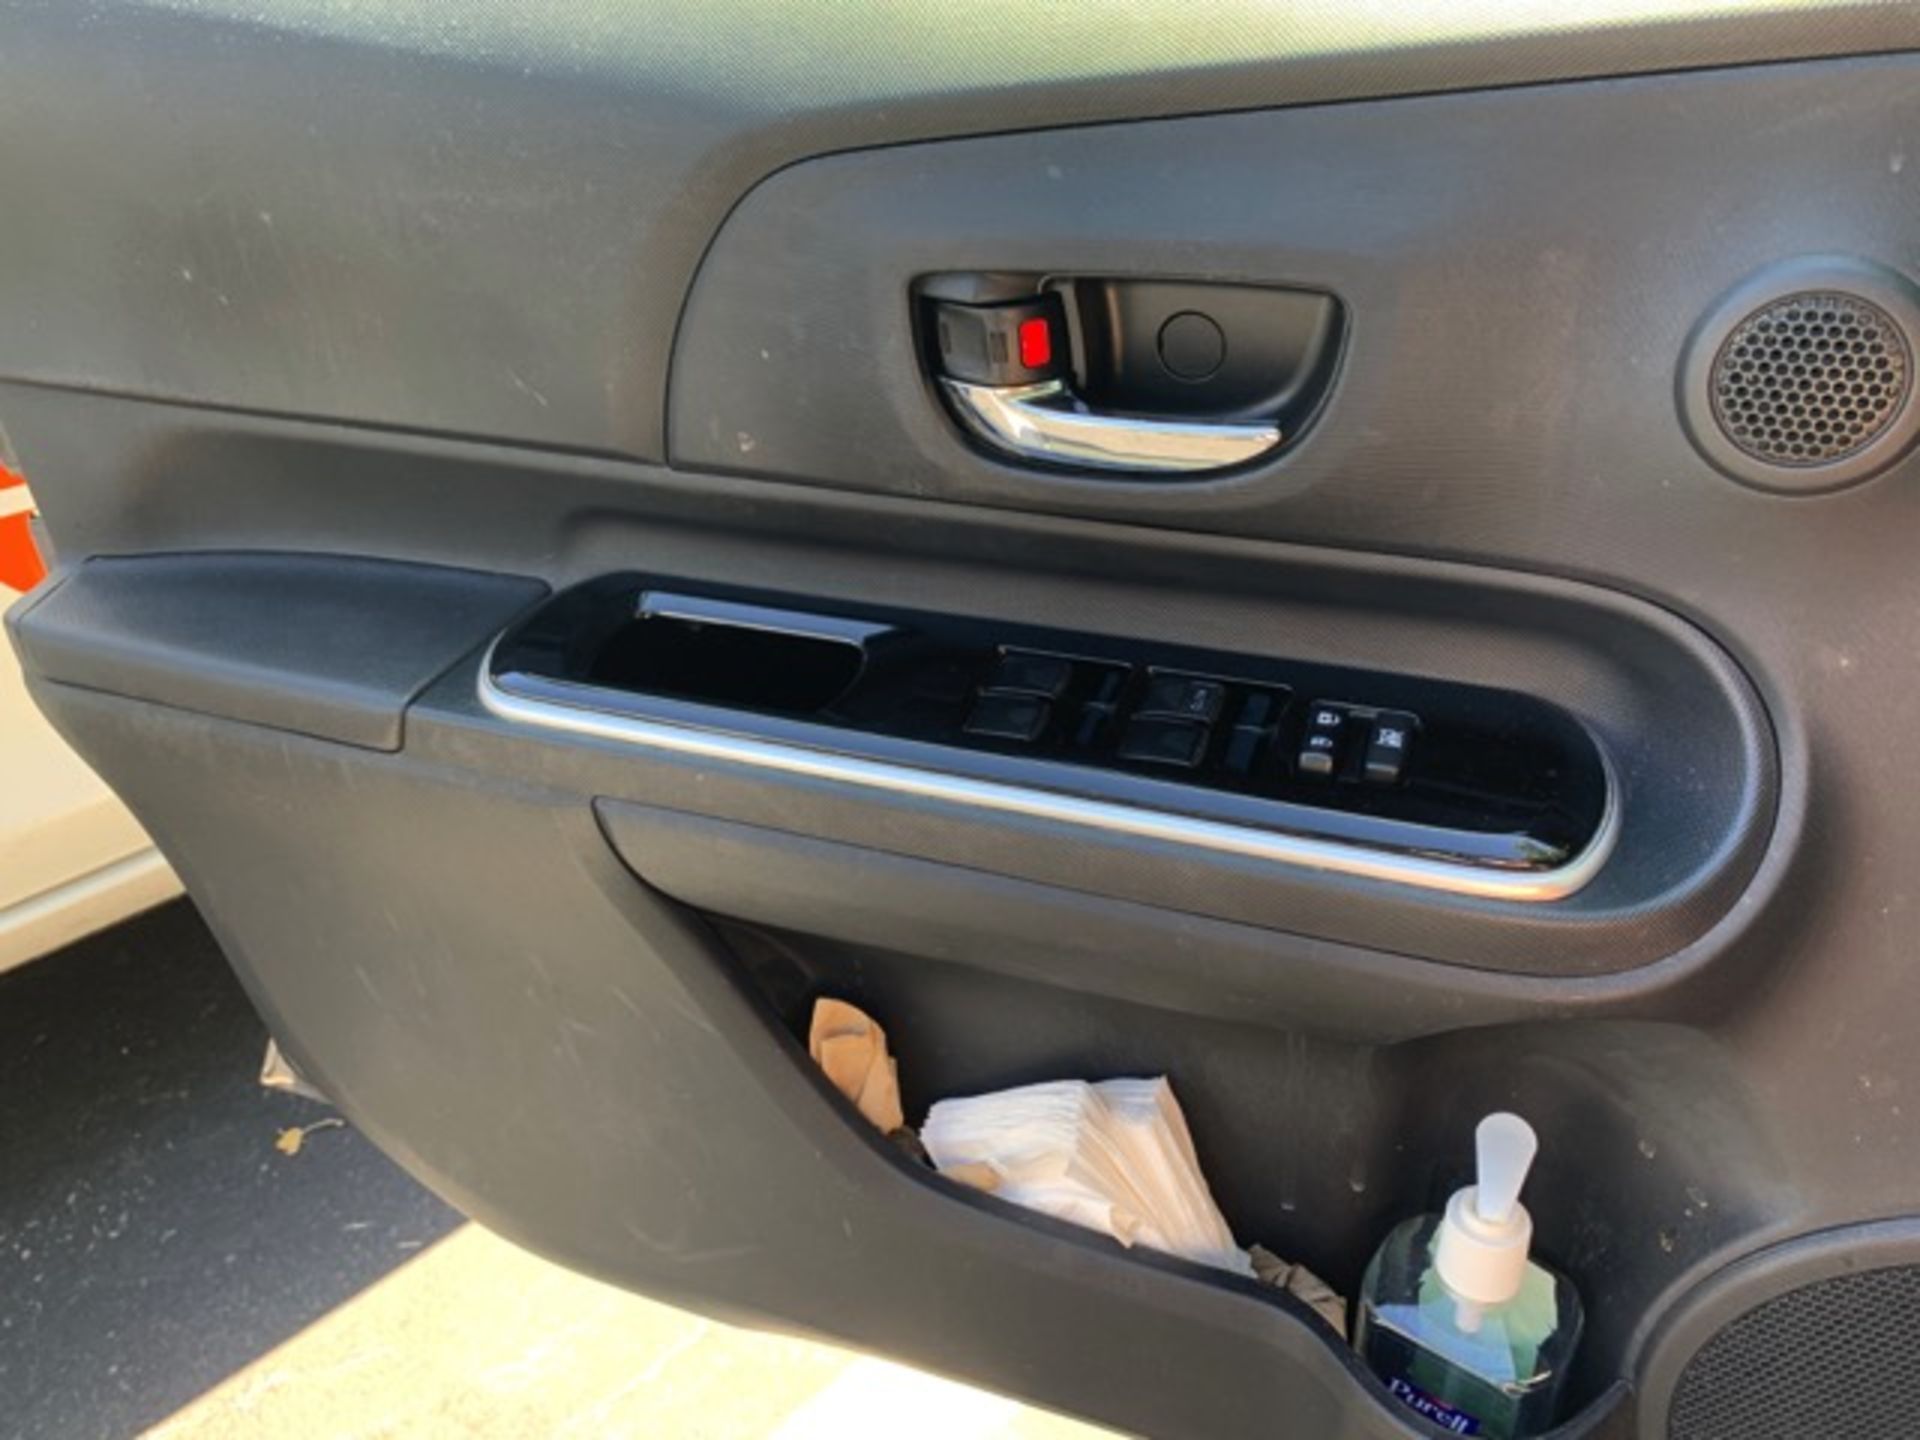 2015 Toyota Prius C, Auto Transmission, L4 1.5 Liter, DOHC 16V, AM/FM CD, Cruise, AC, Power Doors - Image 11 of 15